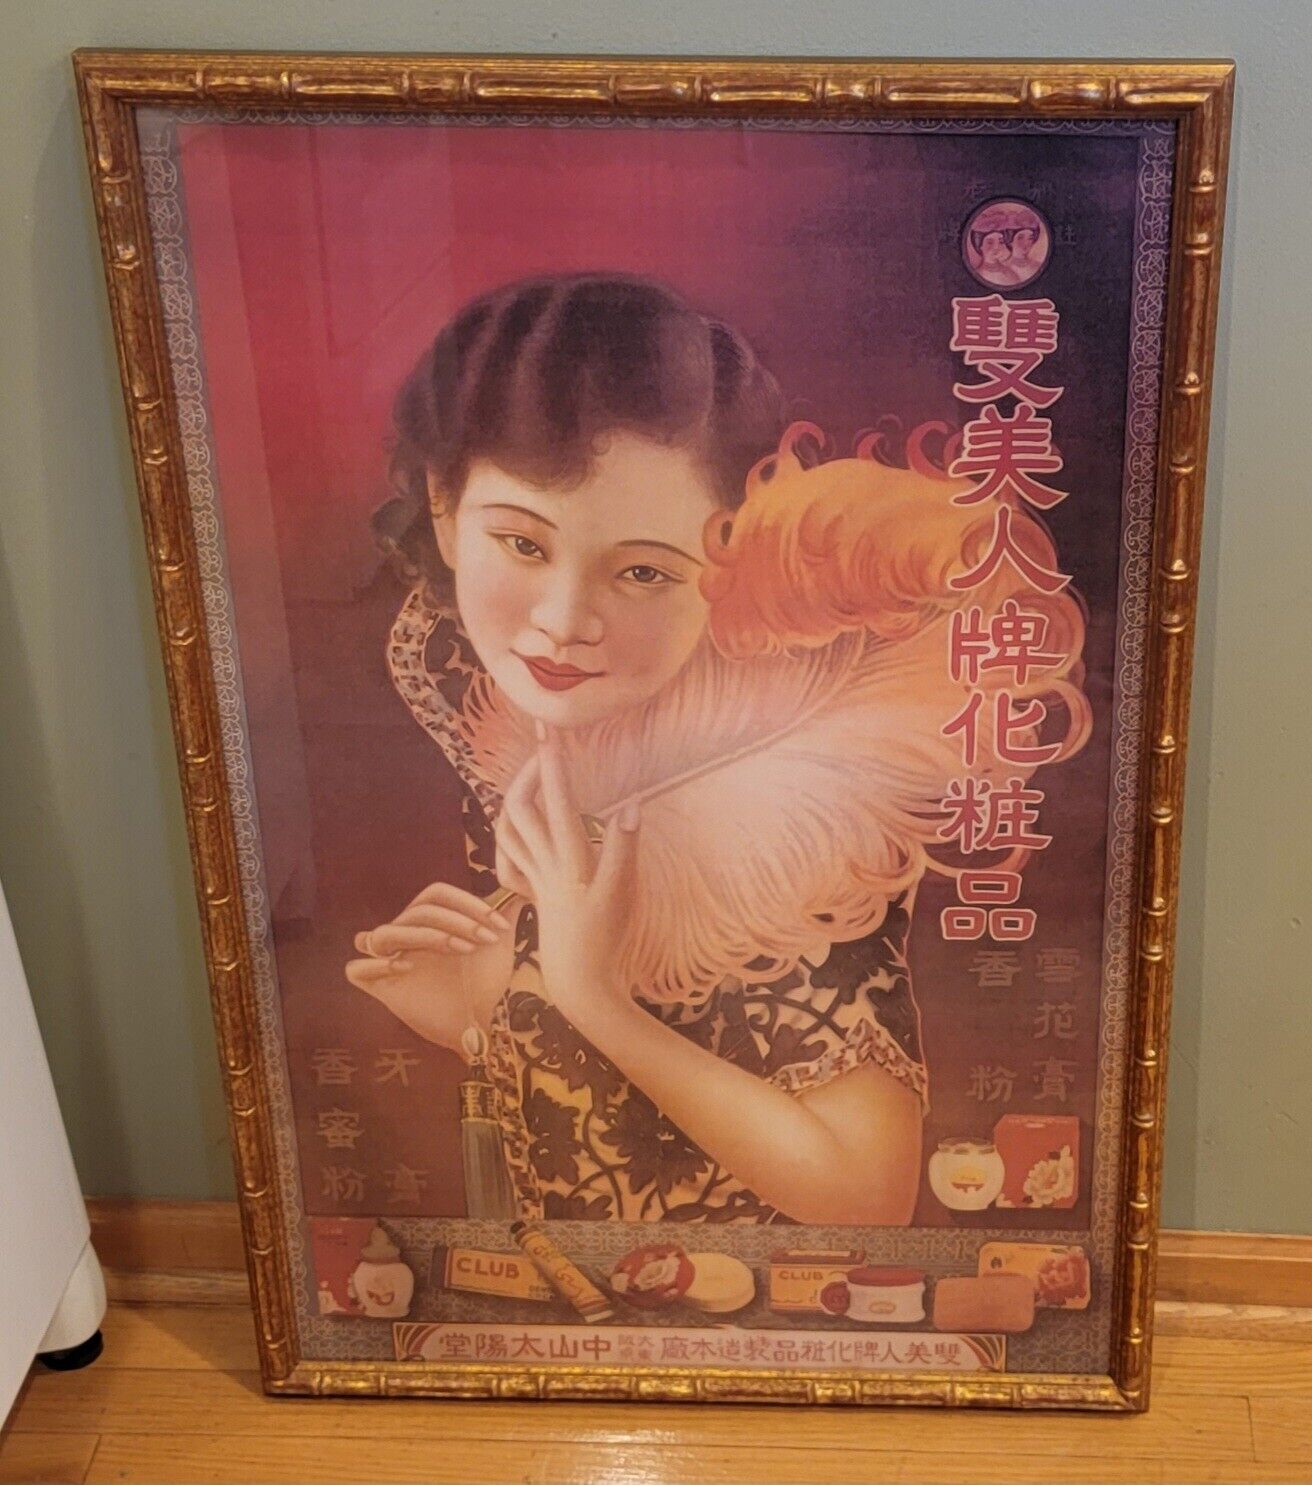 Vintage SHANGHAI Asian BEAUTY COSMETICS Advertising Framed POSTER